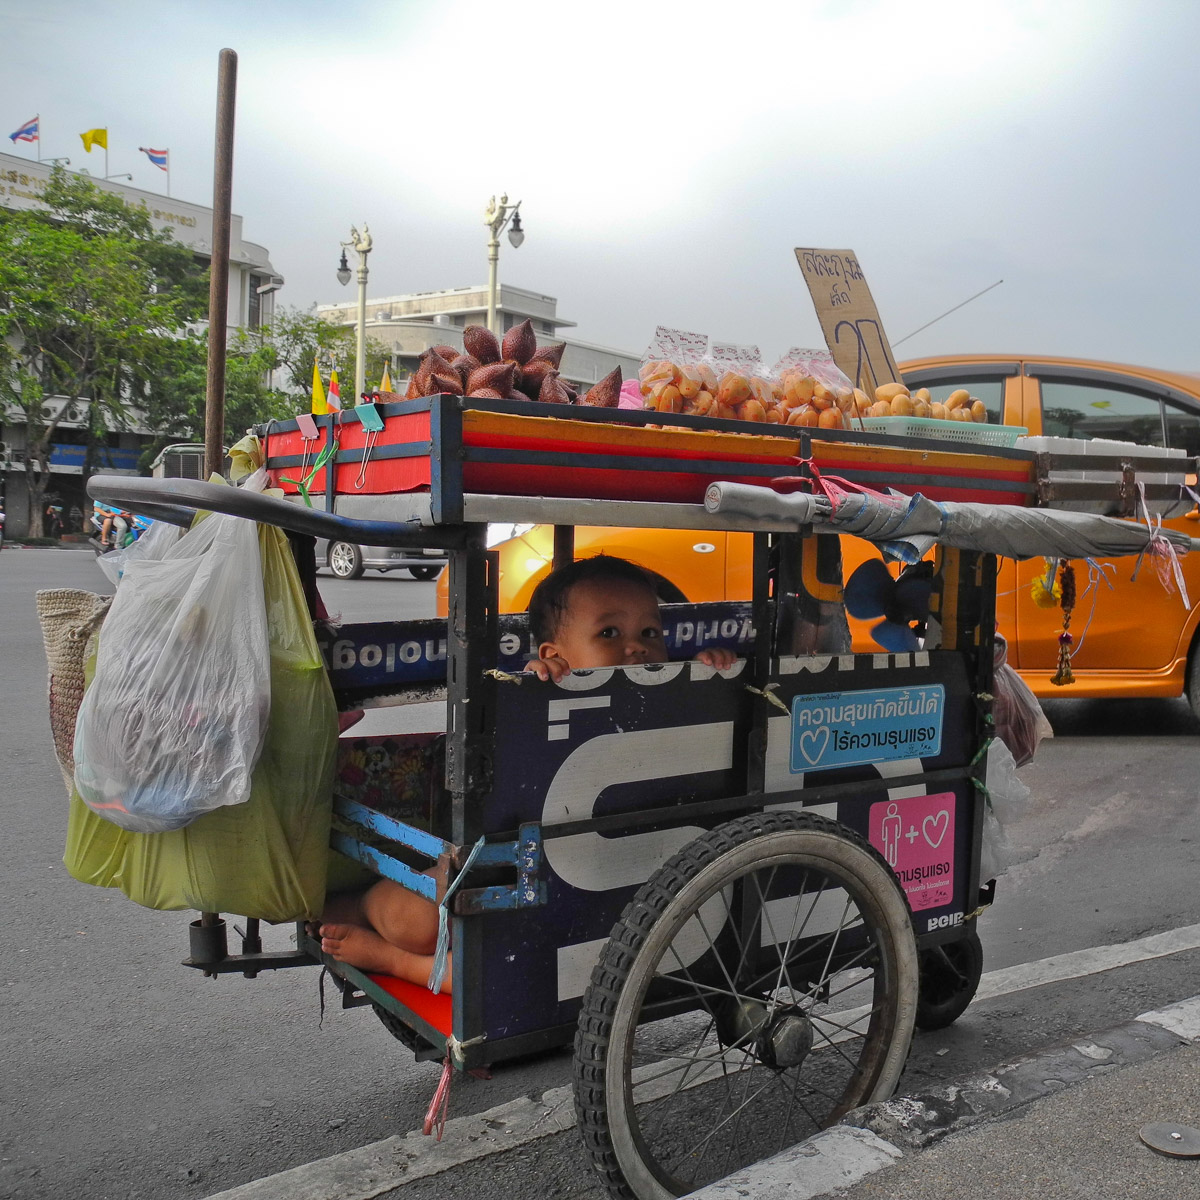 Streetfood, mobile cookshop